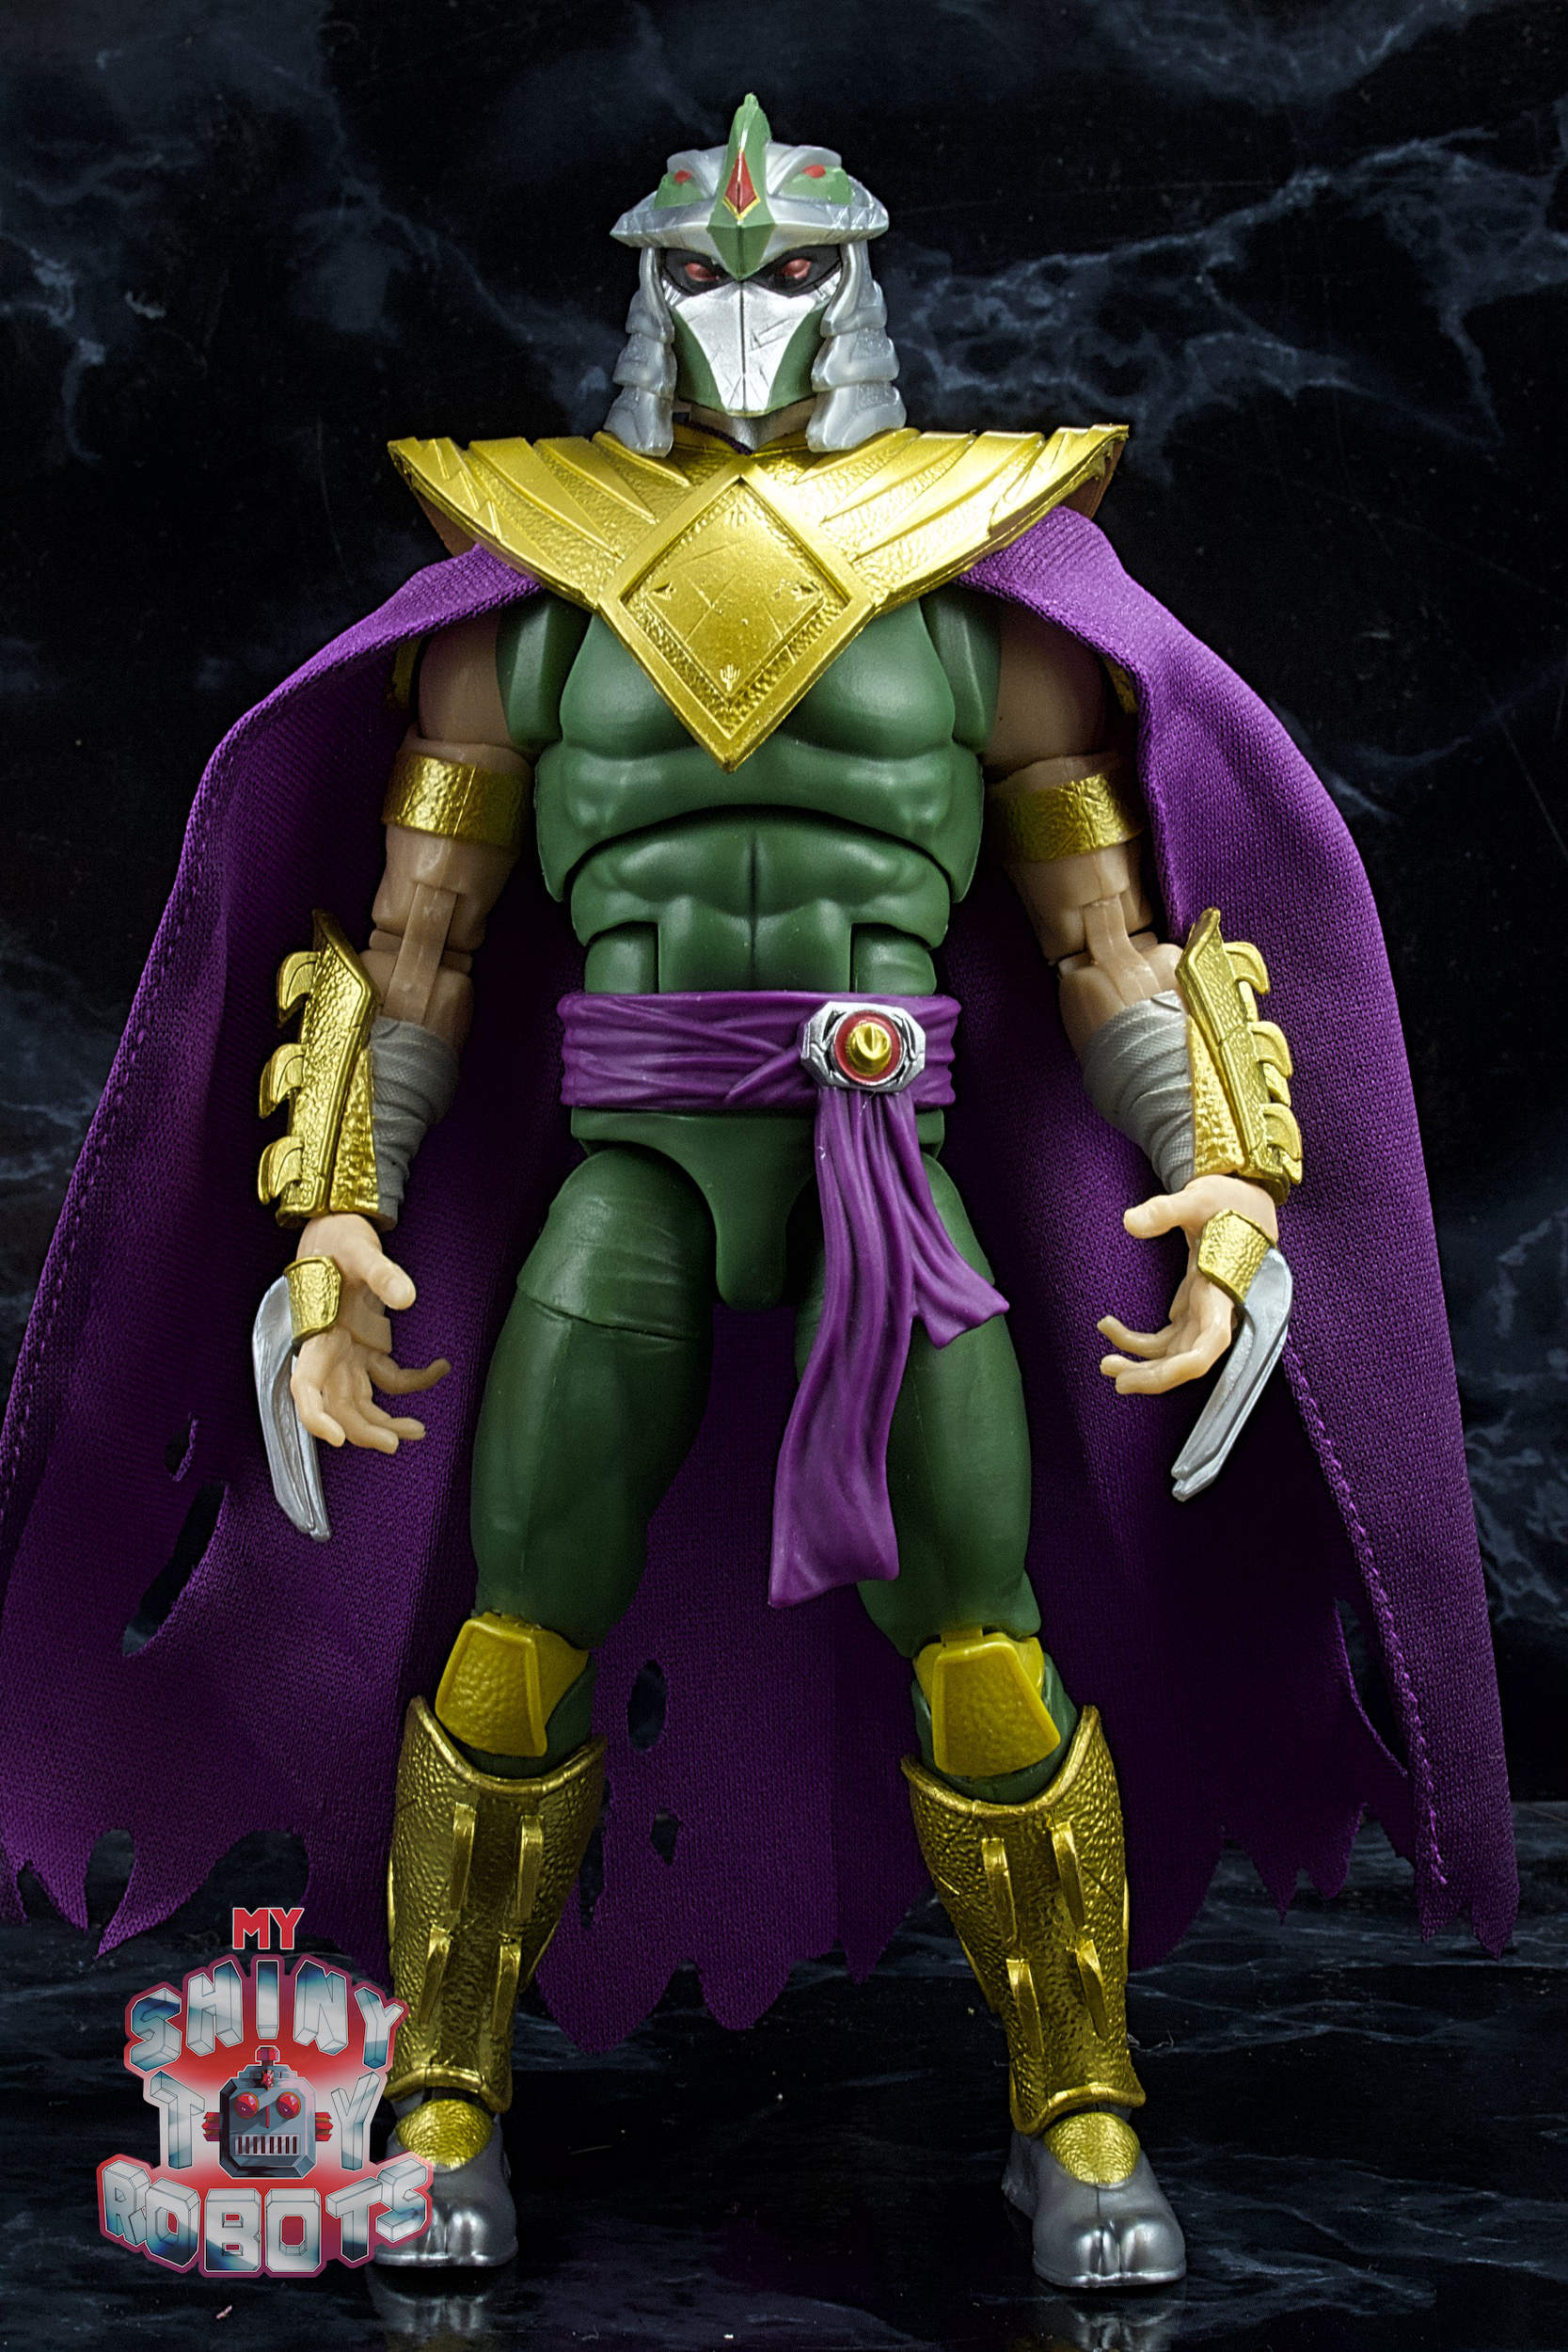 Power Rangers X Teenage Mutant Ninja Turtles Lightning Collection Morphed  Shredder Green Ranger Action Figure